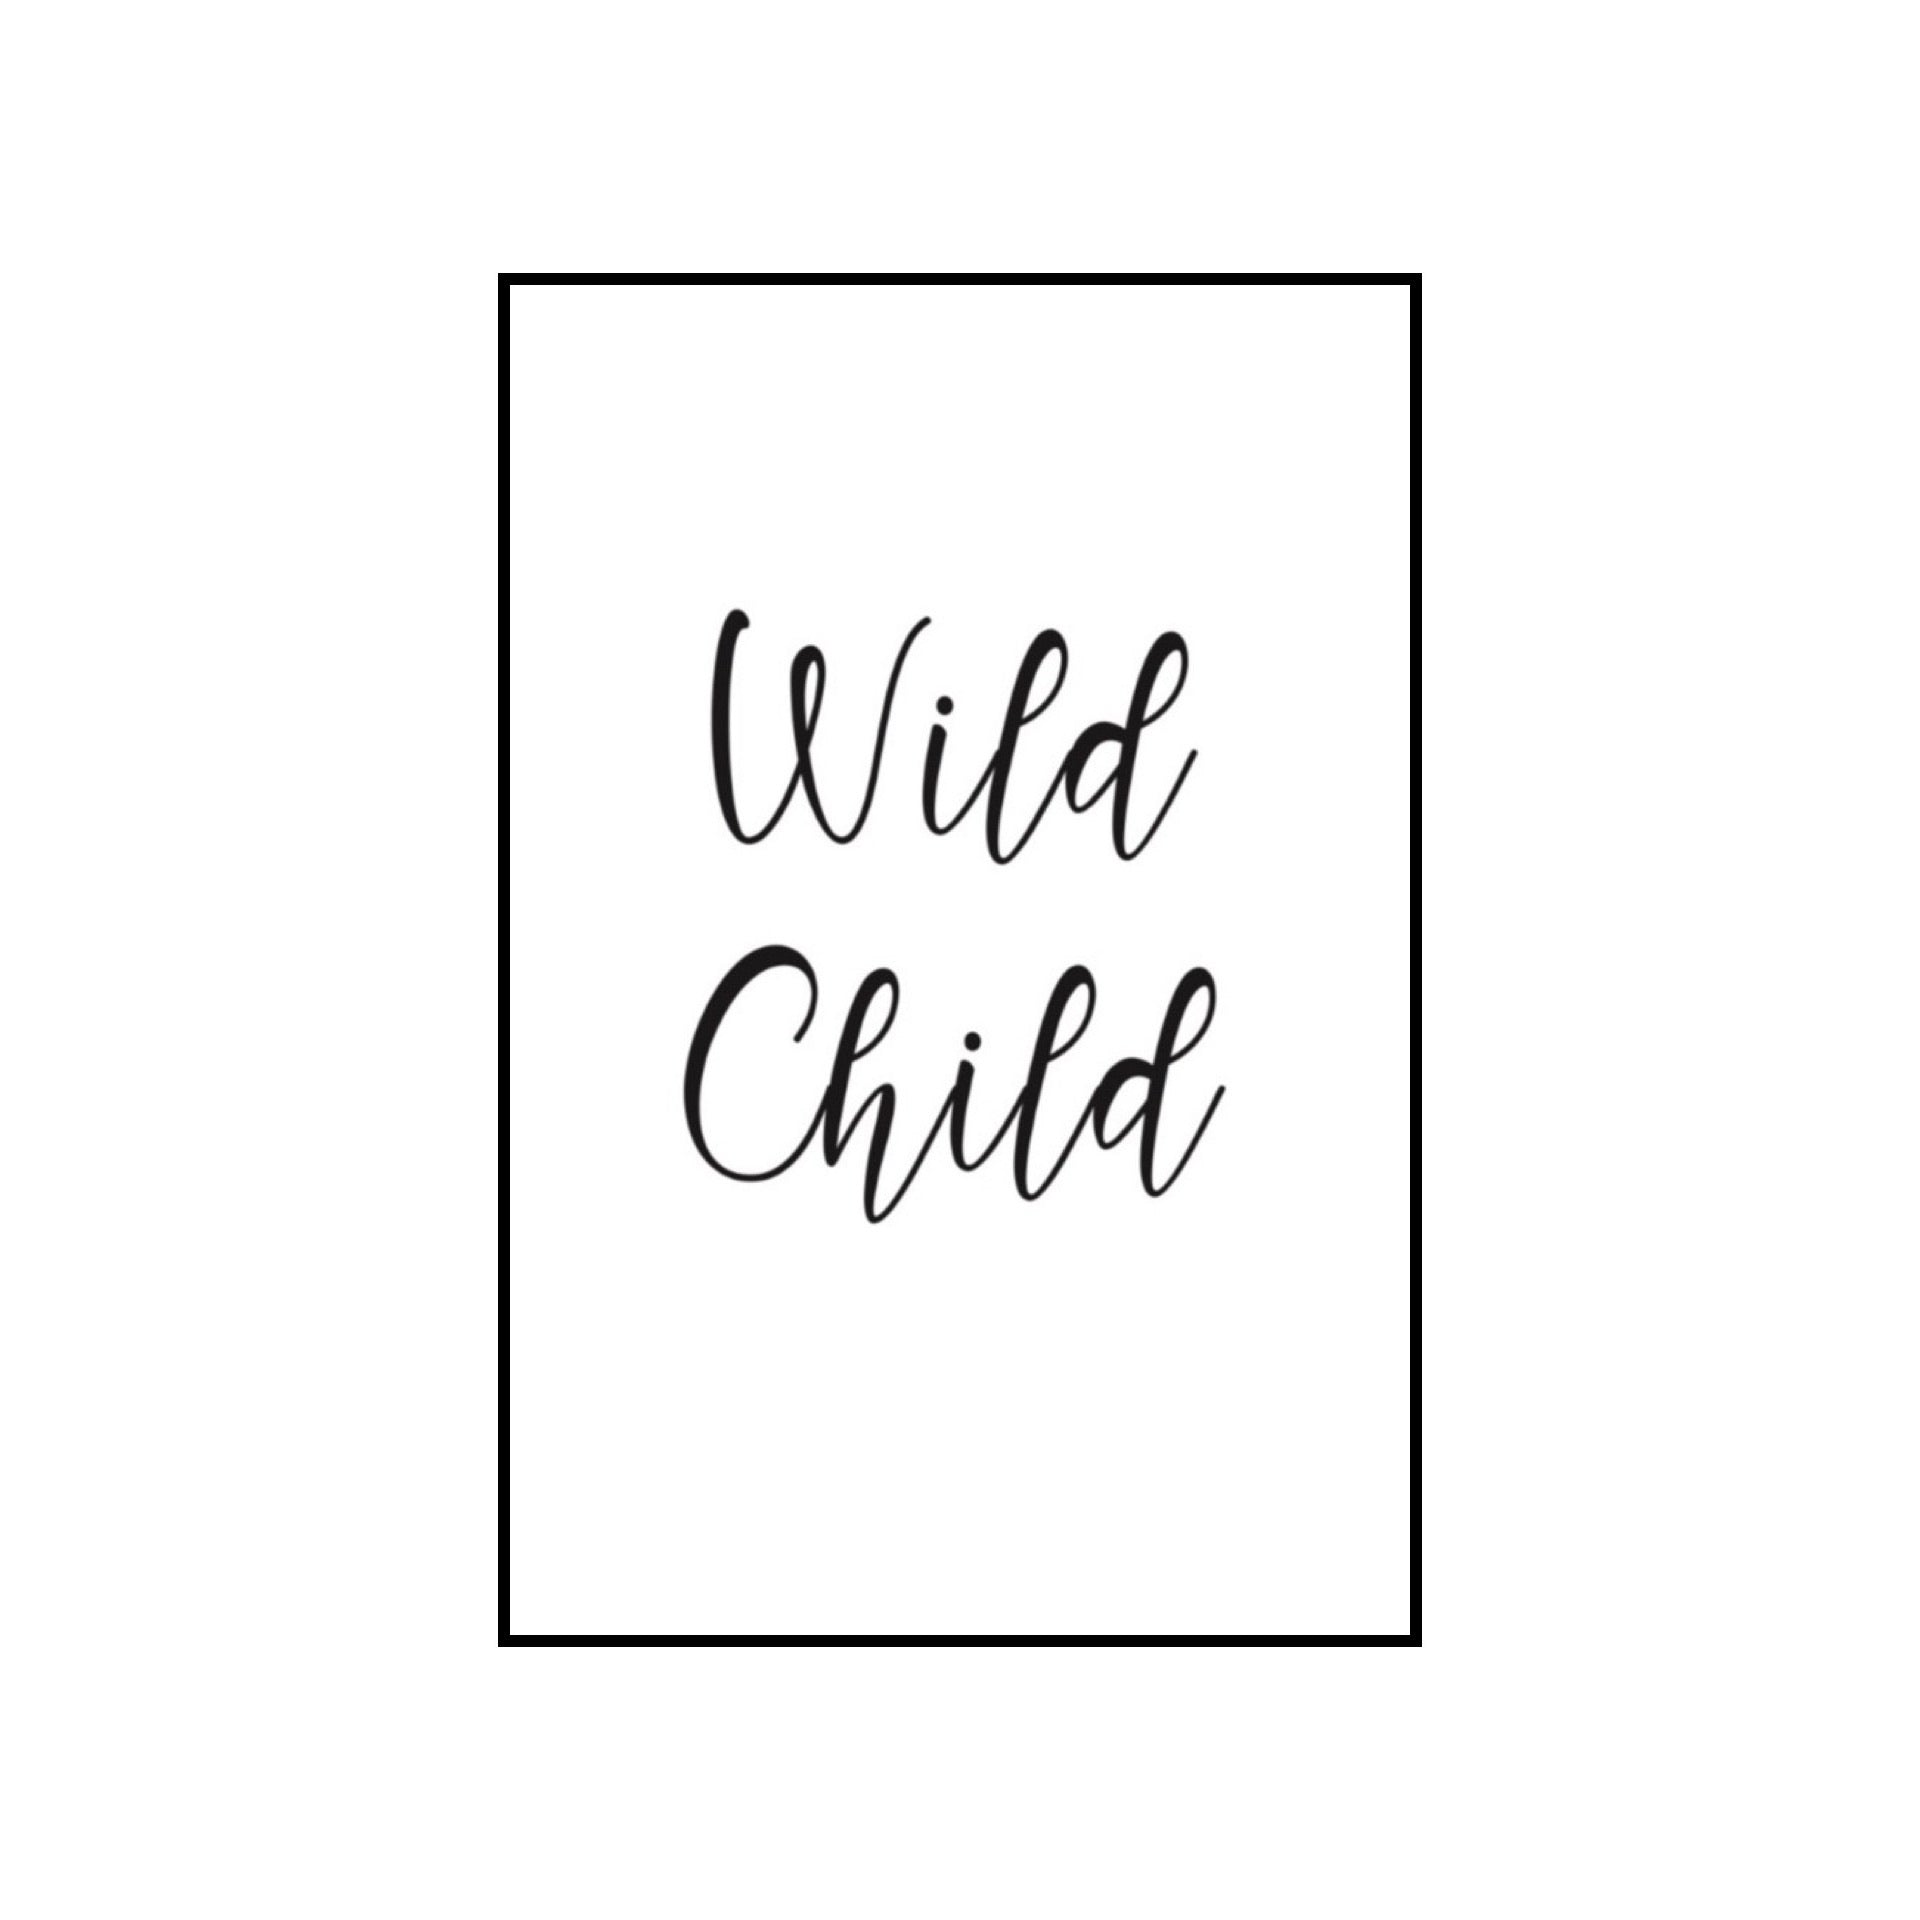 Wild child - THE WALL STYLIST